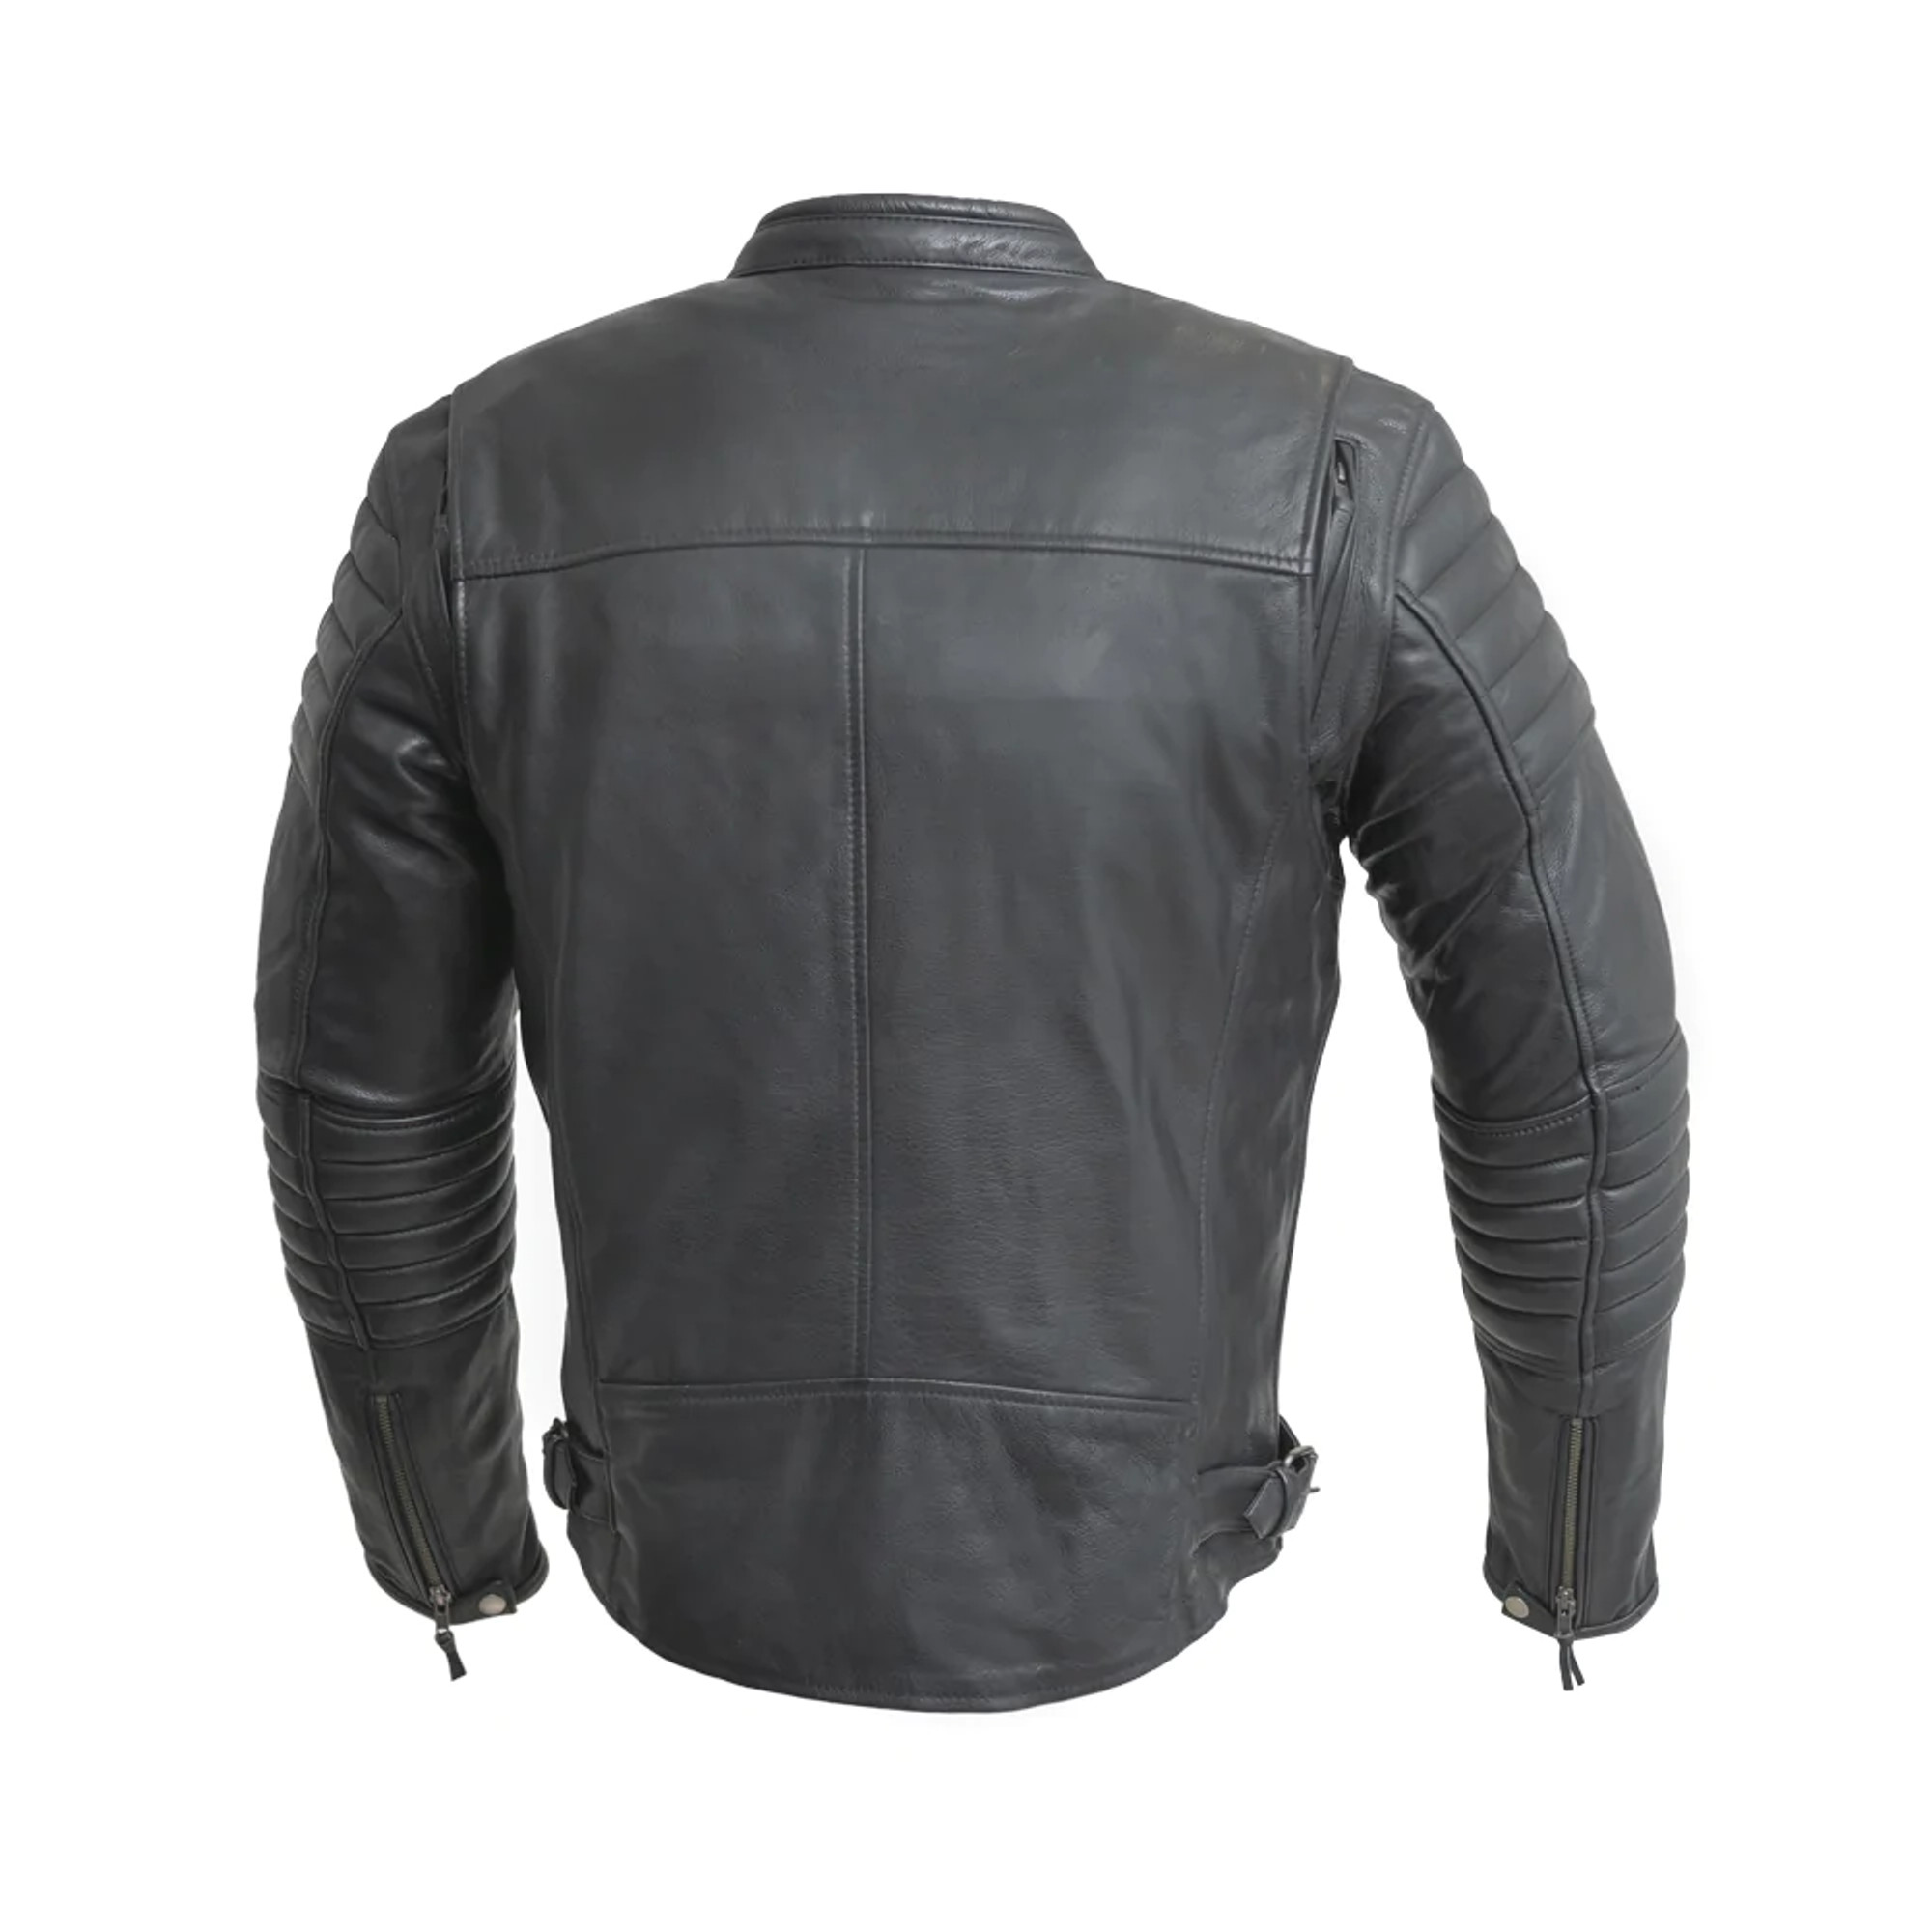 Commuter Jacket | Black Signature-fit Nylon - $180.00 | The CUTS Marketplace